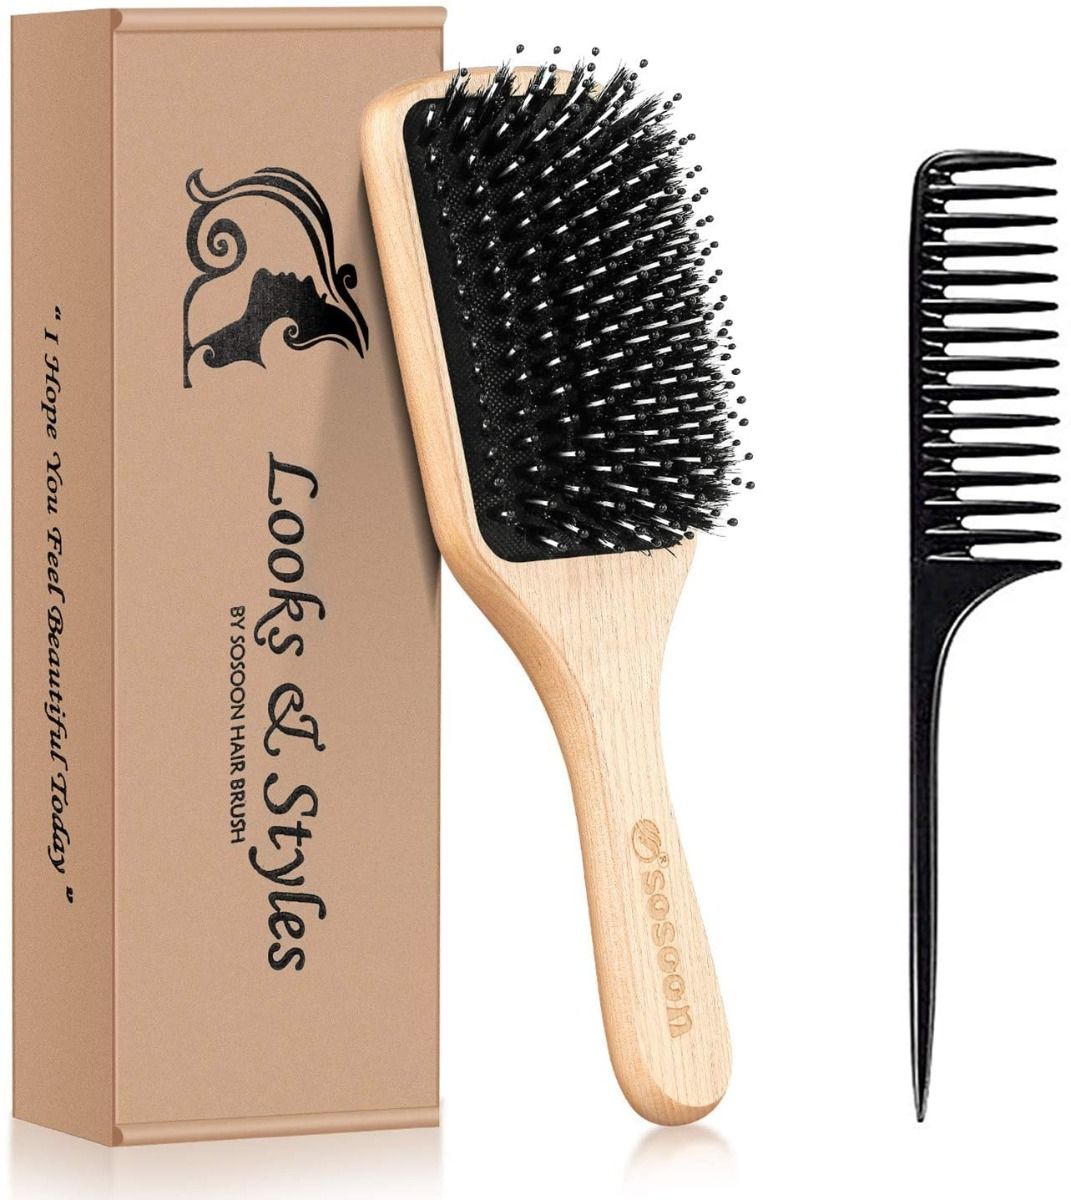 Sosoon Boar Bristle Paddle Hairbrush 